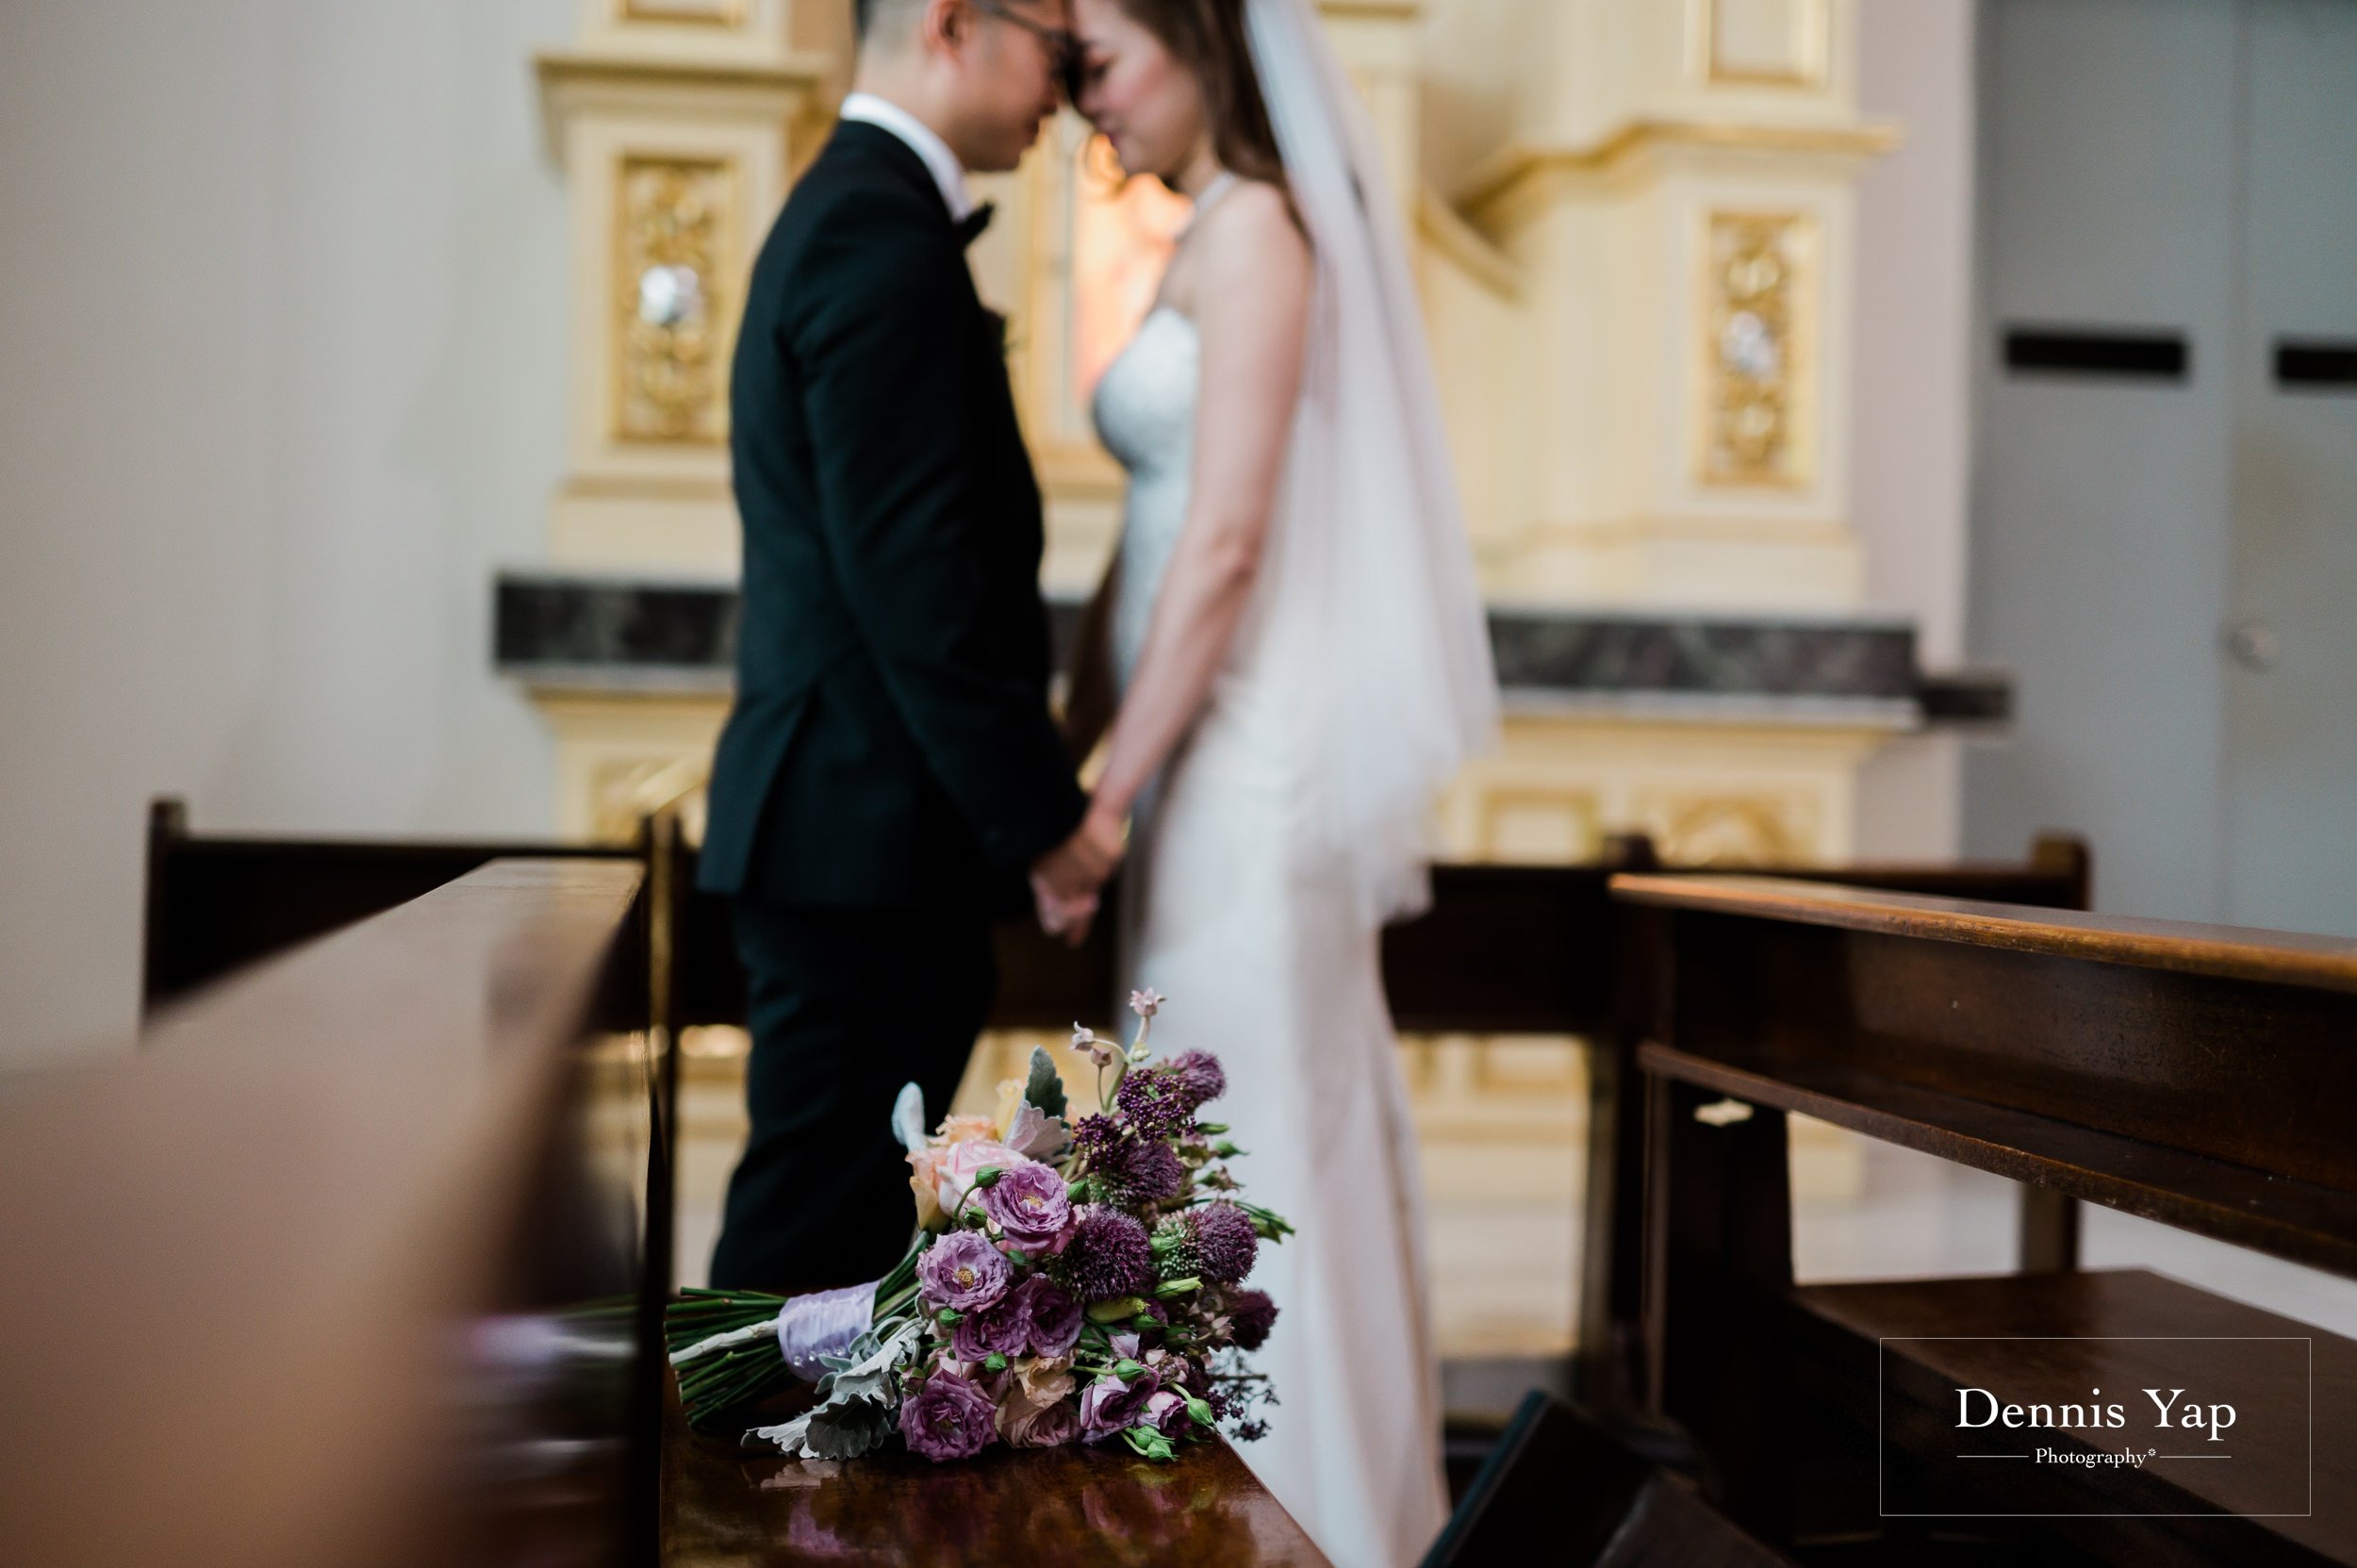 reuben daphne church wedding st francis xavier kuala lumpur dennis yap photography-41.jpg